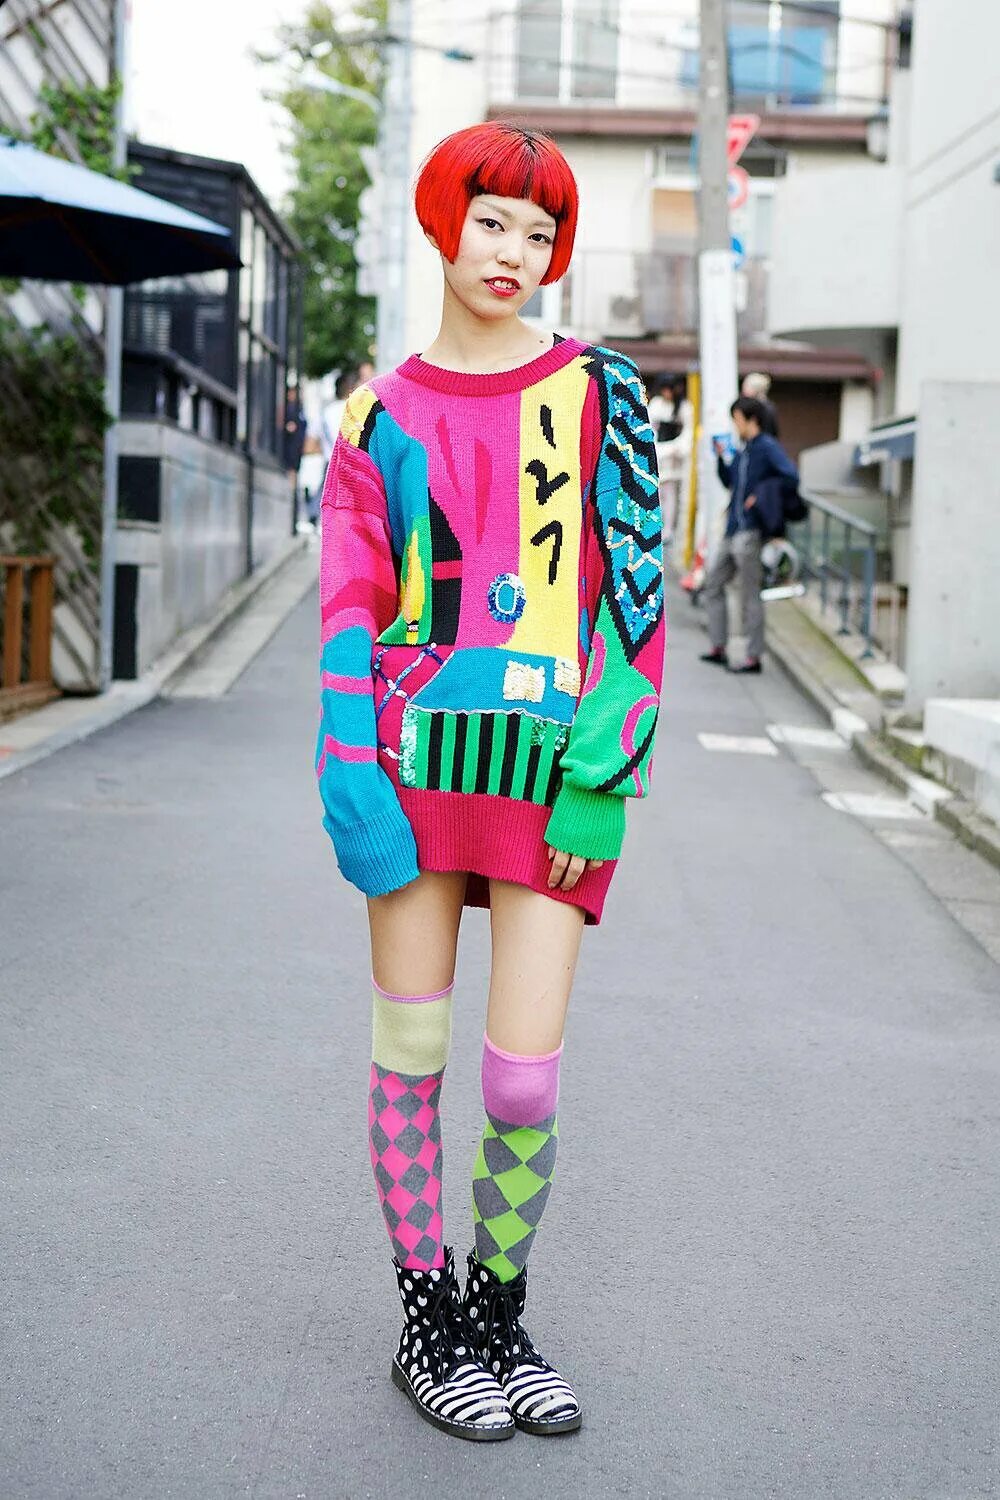 Токийские одежда. Хараджуку Токио стиль. Харадзюку Токио. Хараджуку Токио стиль одежды. Харадзюку улица в Токио.